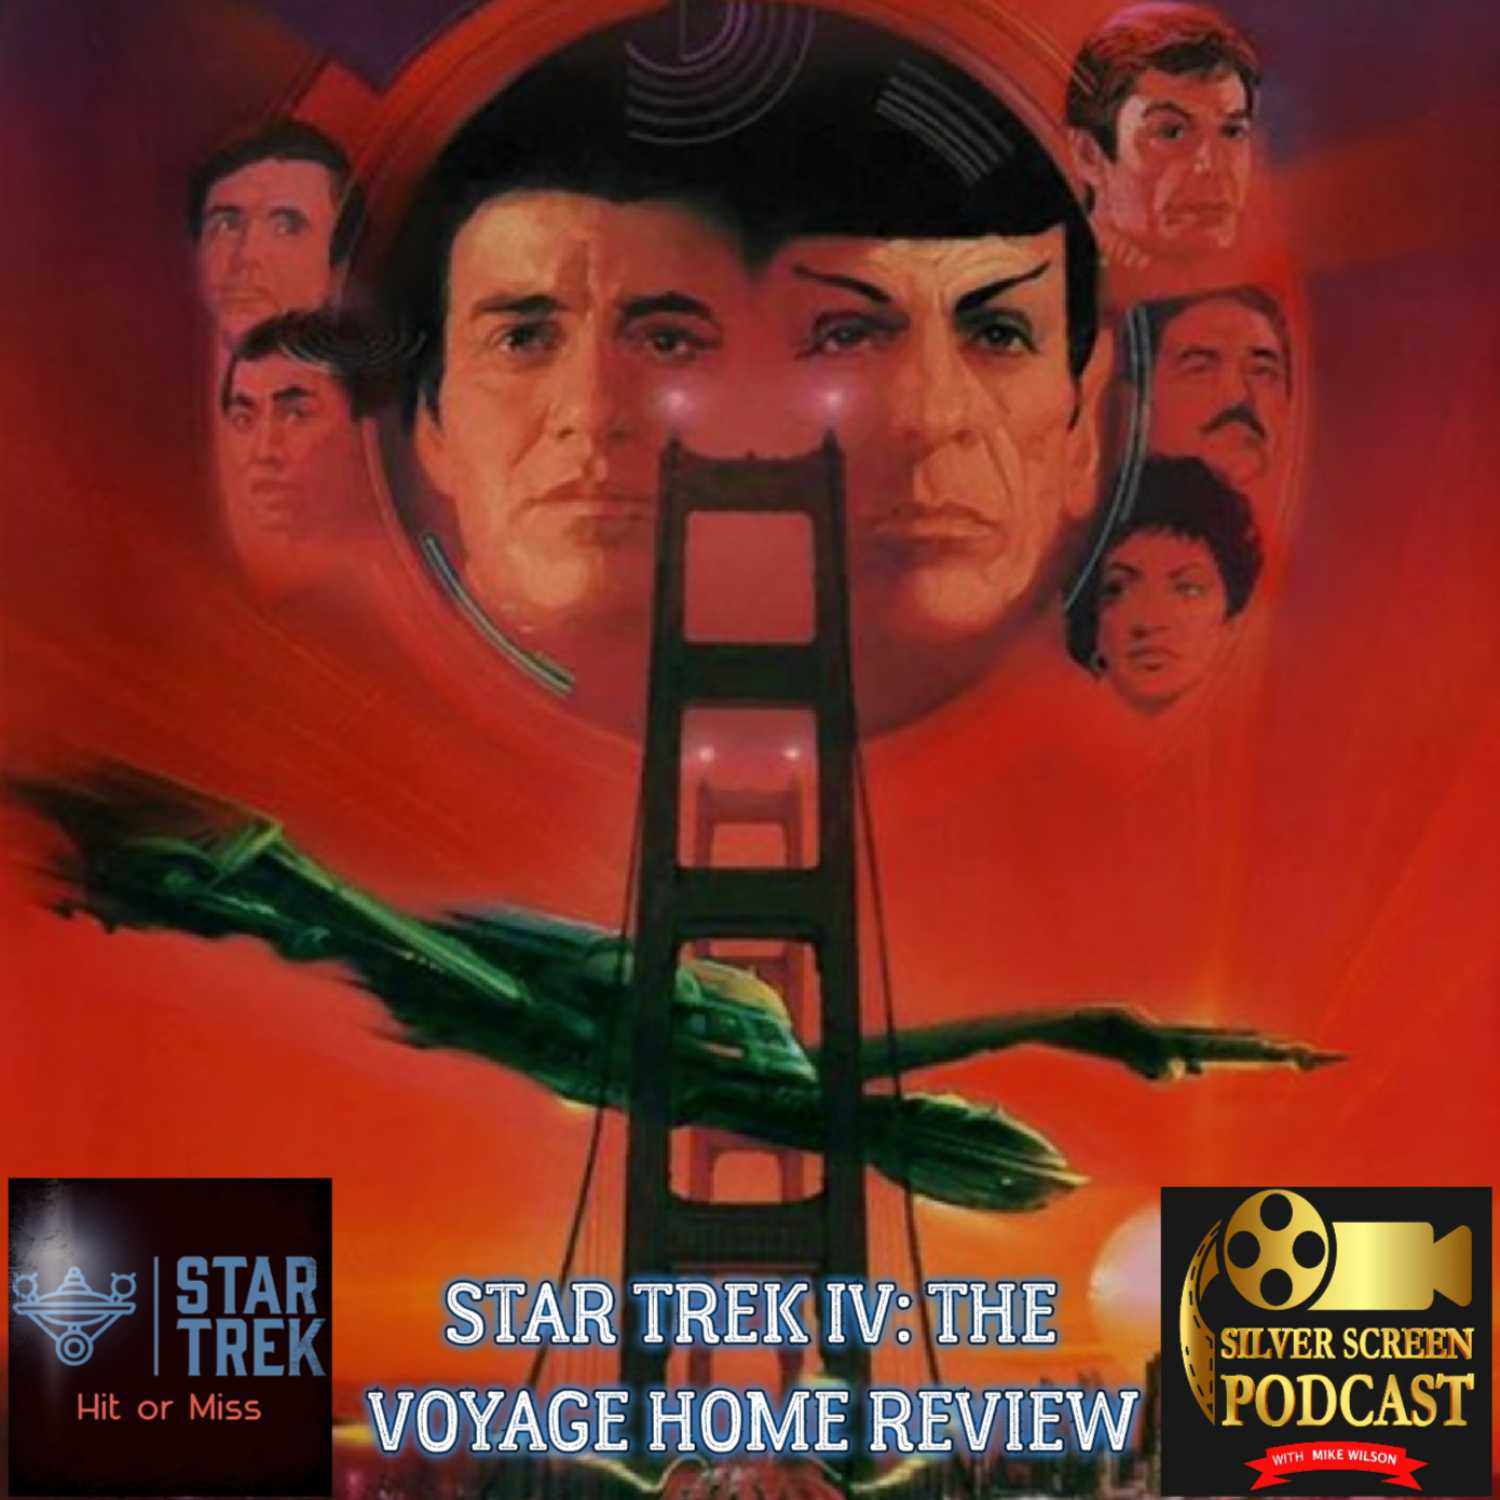 HoM: Star Trek - "Star Trek IV: The Voyage Home" Review